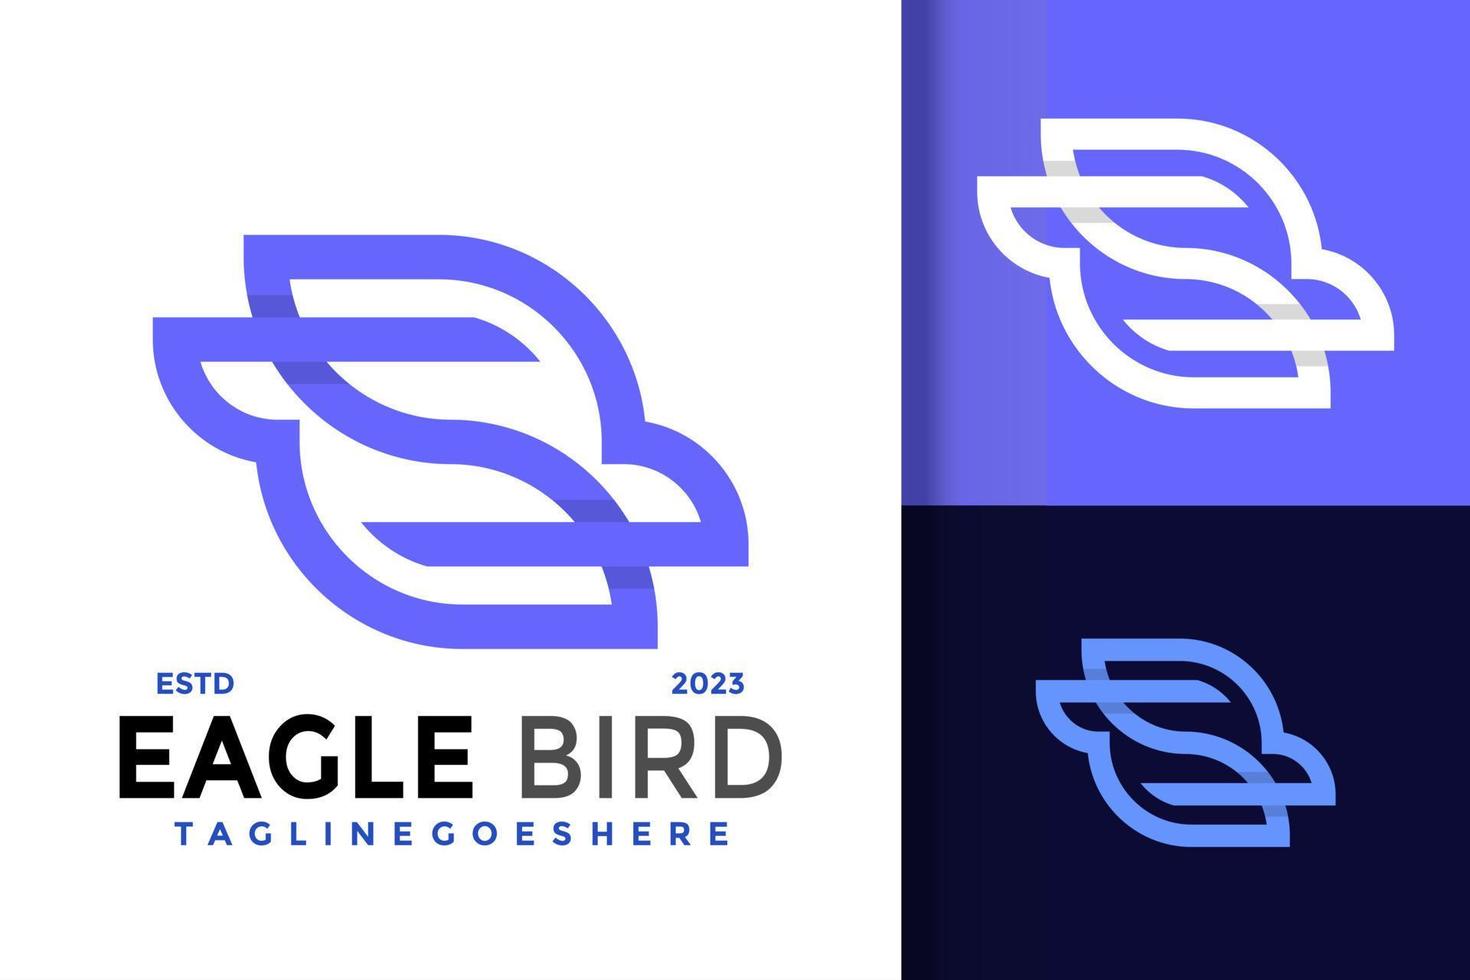 Letter S Eagle Bird logo vector icon illustration